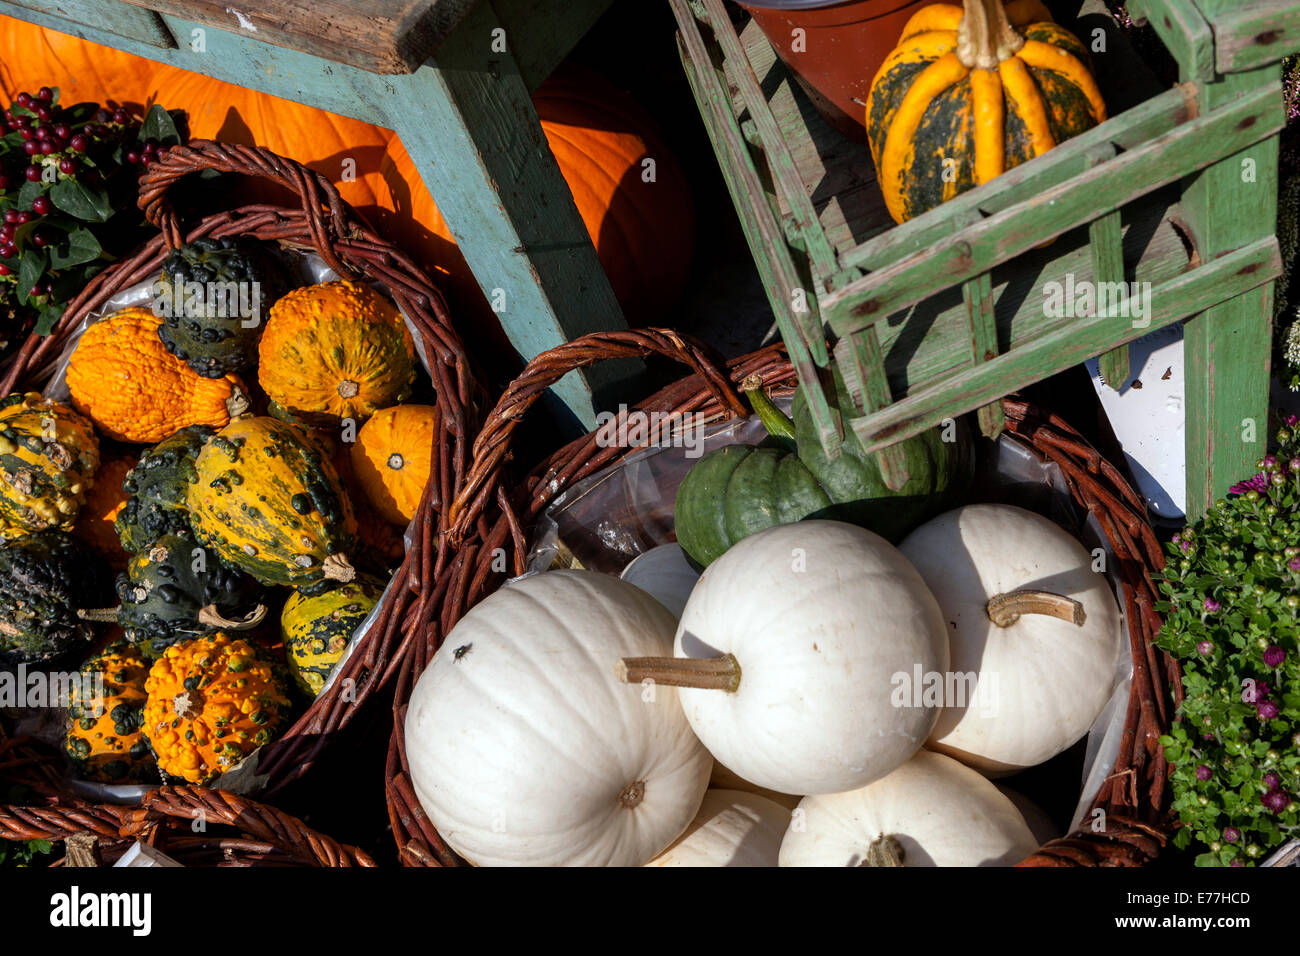 Pumpkins shop squashes, Decorative display Cucurbita pepo Ornamental gourds in basket Stock Photo